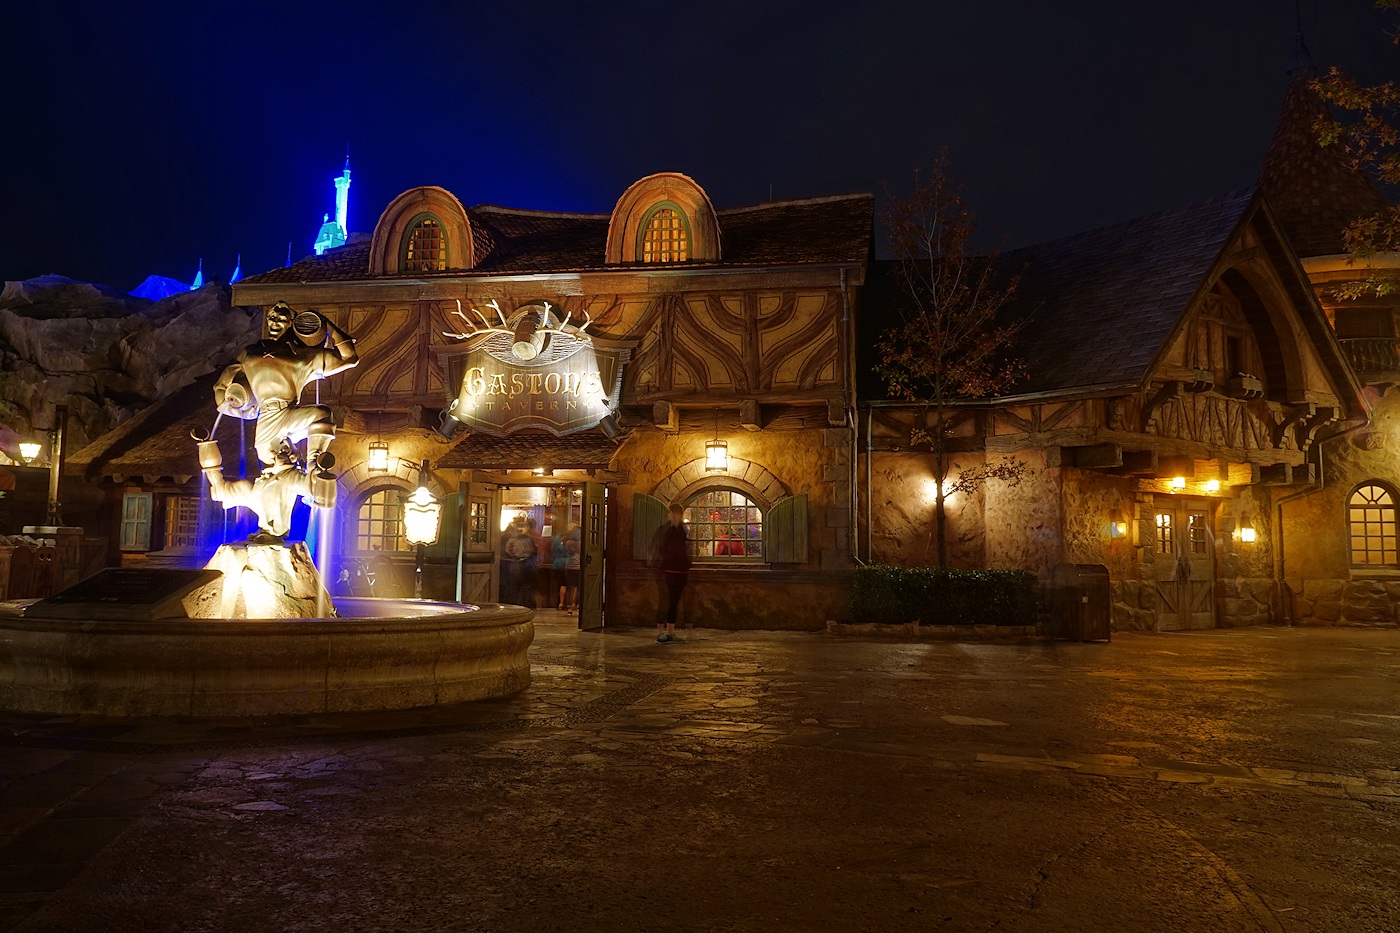 Gastons Tavern, night